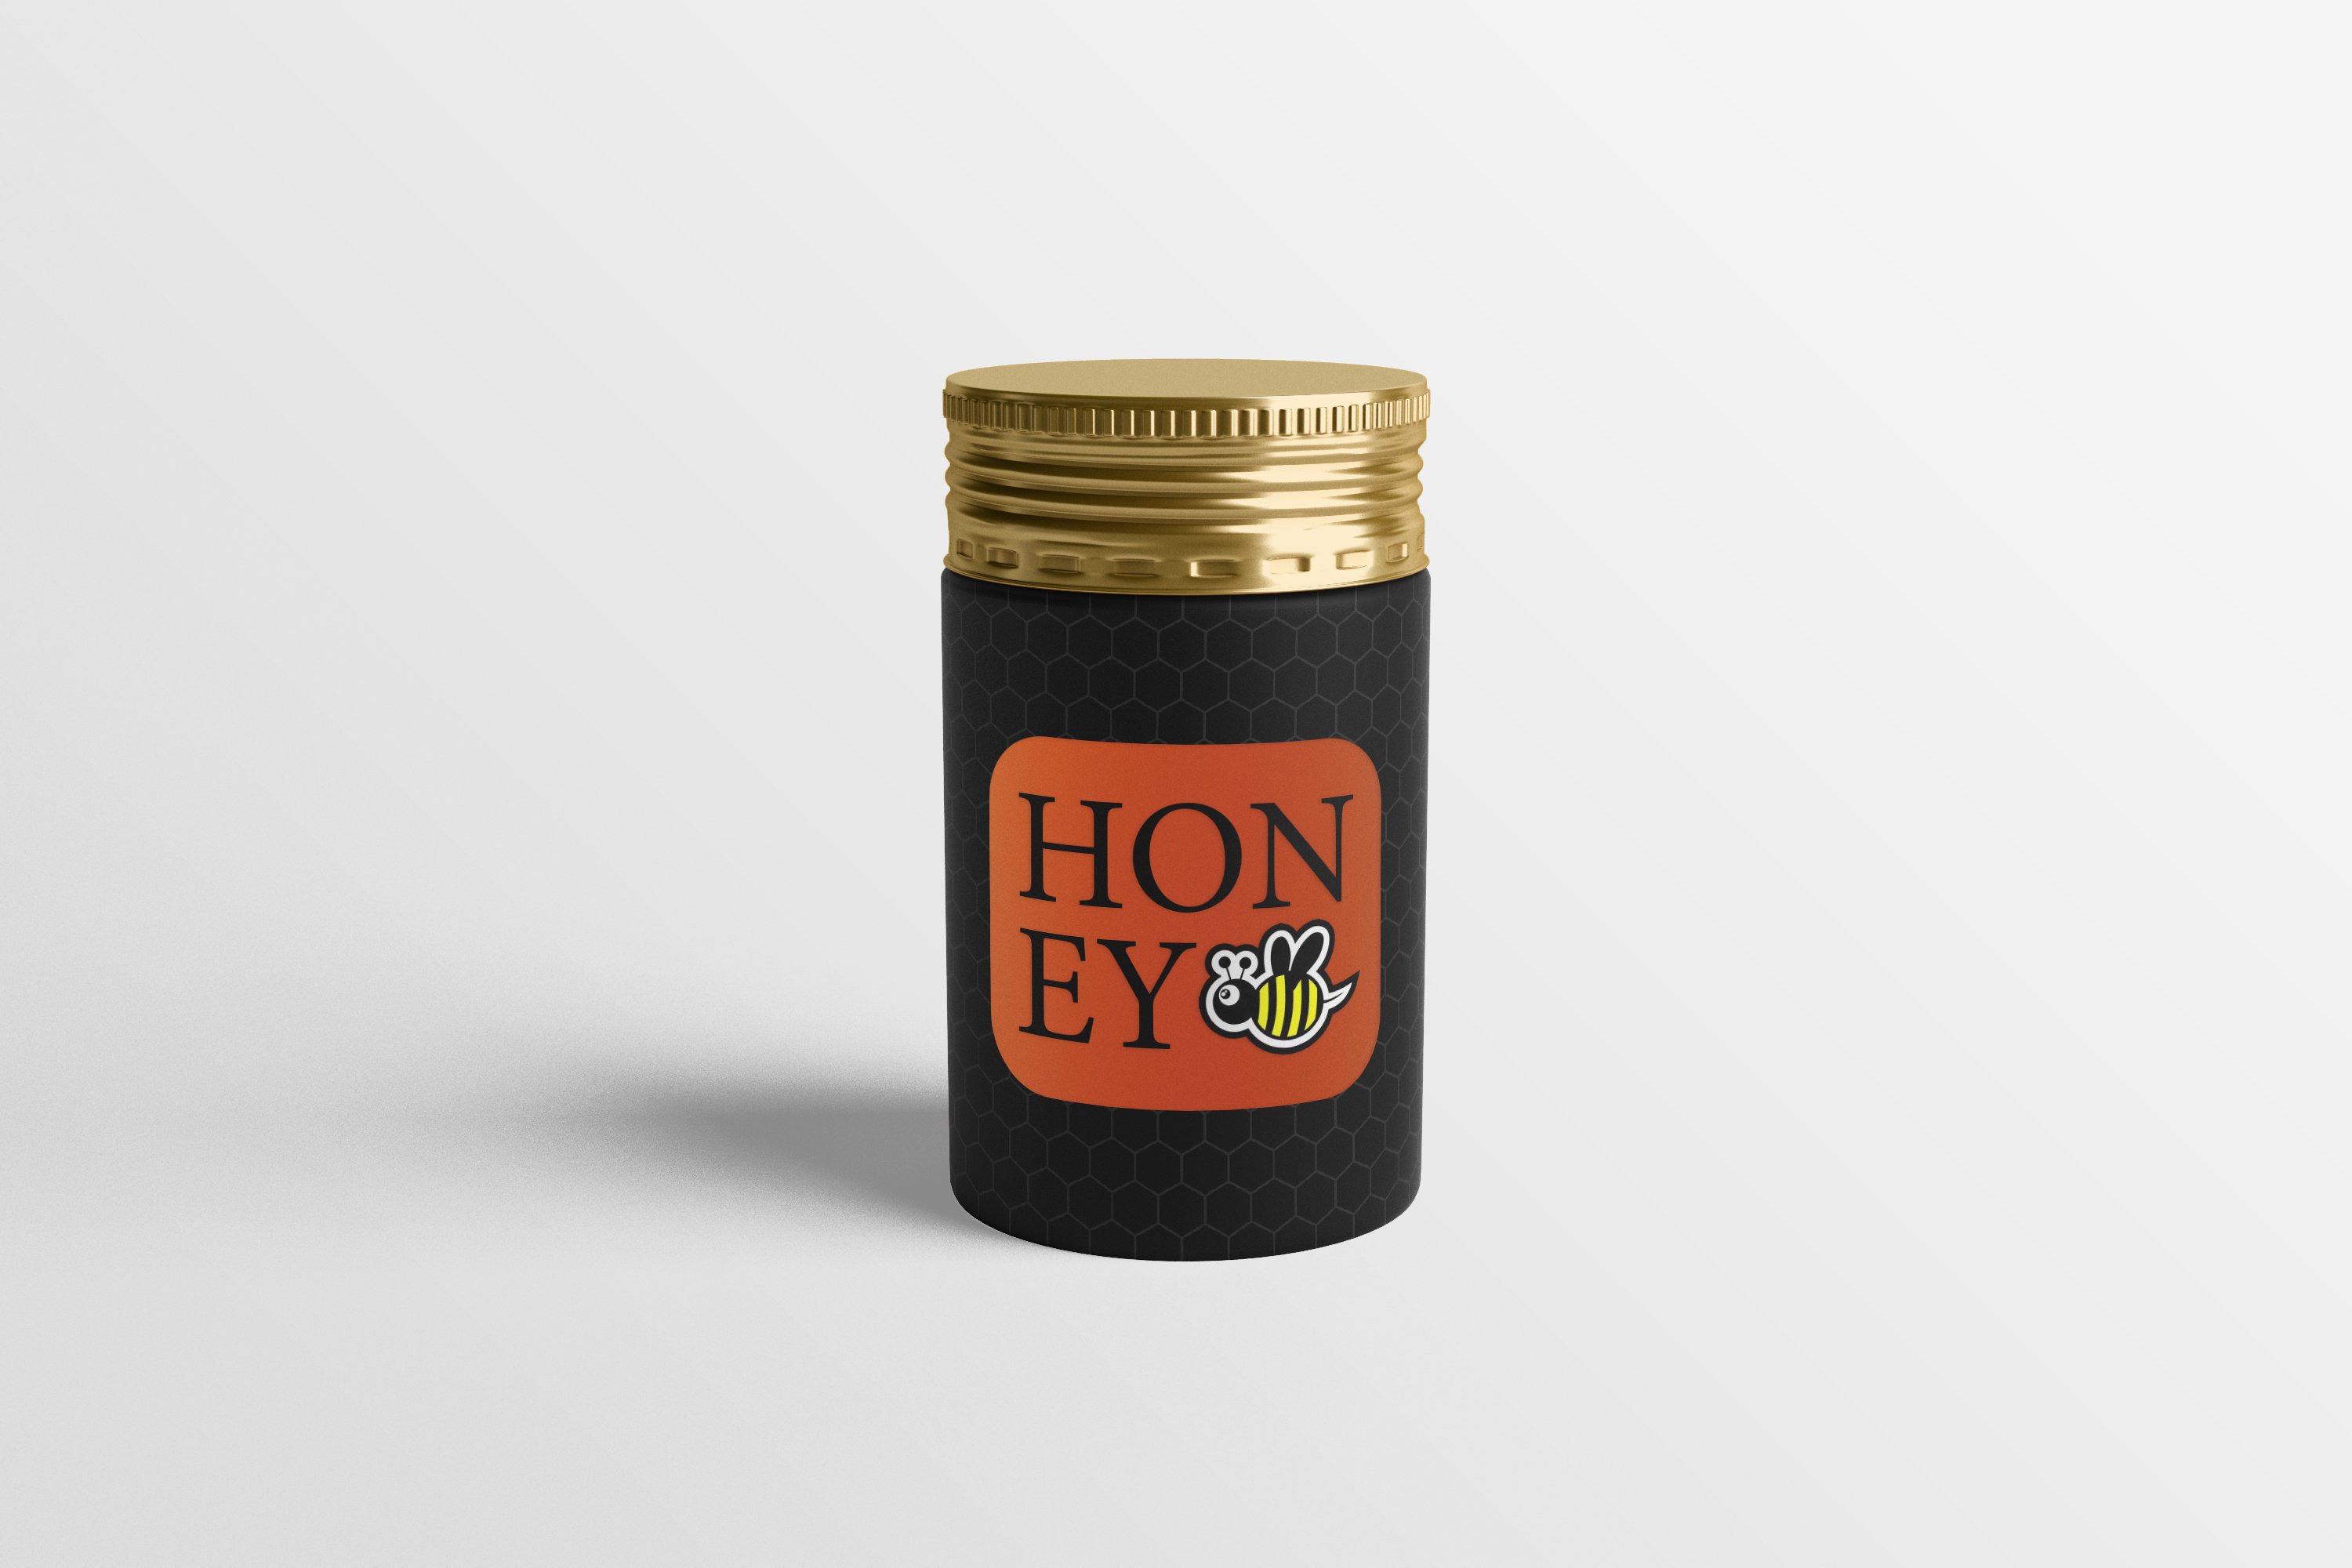 Dark honey bottle with an orange label and some logo.